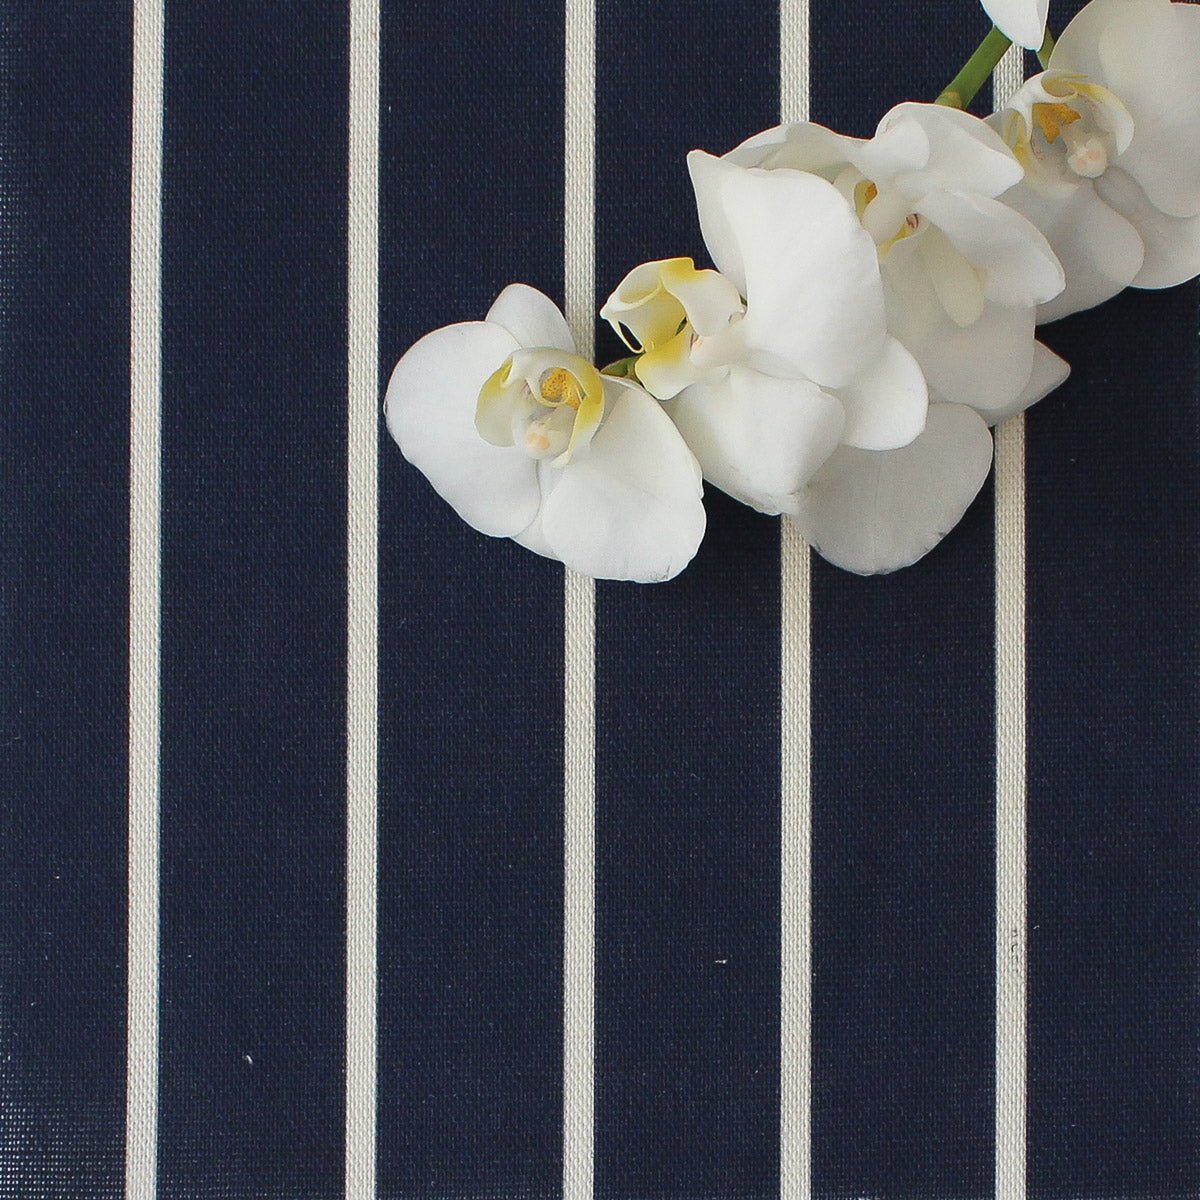 Breton Stripe Reverse Fabric - Navy - Hydrangea Lane Home